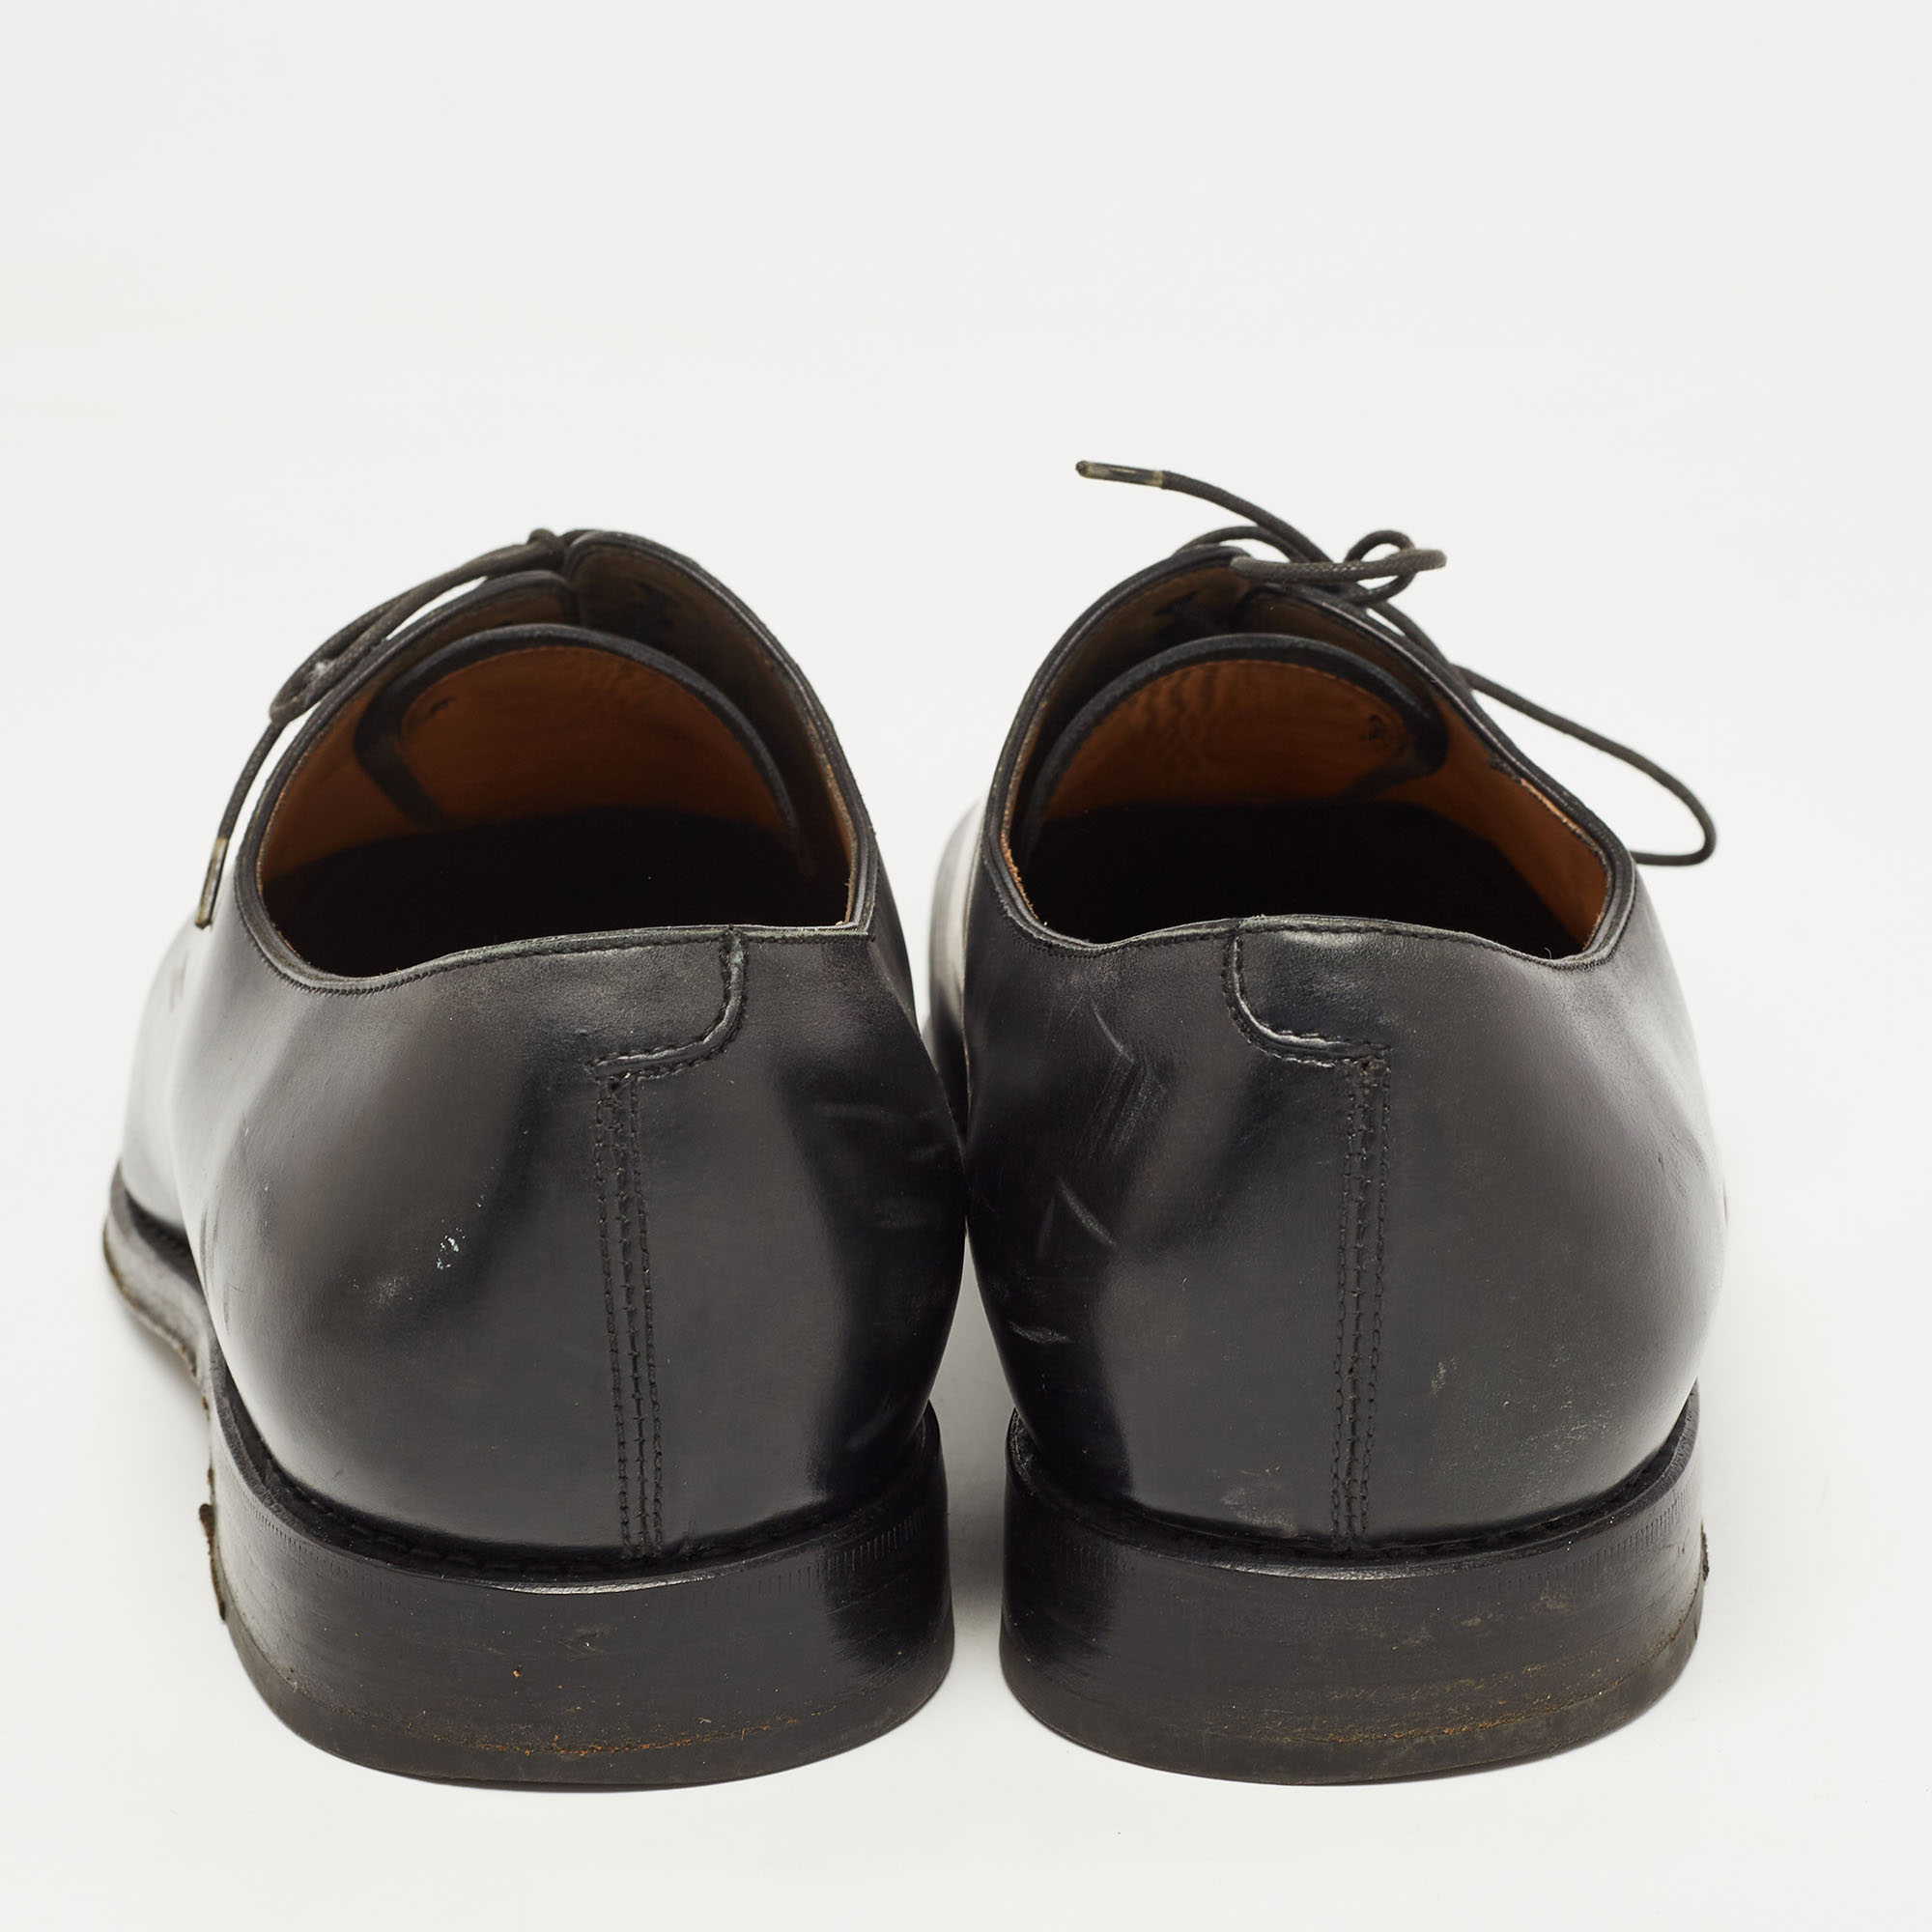 Salvatore Ferragamo Black Leather Lace Up Bit Loafers Size 43